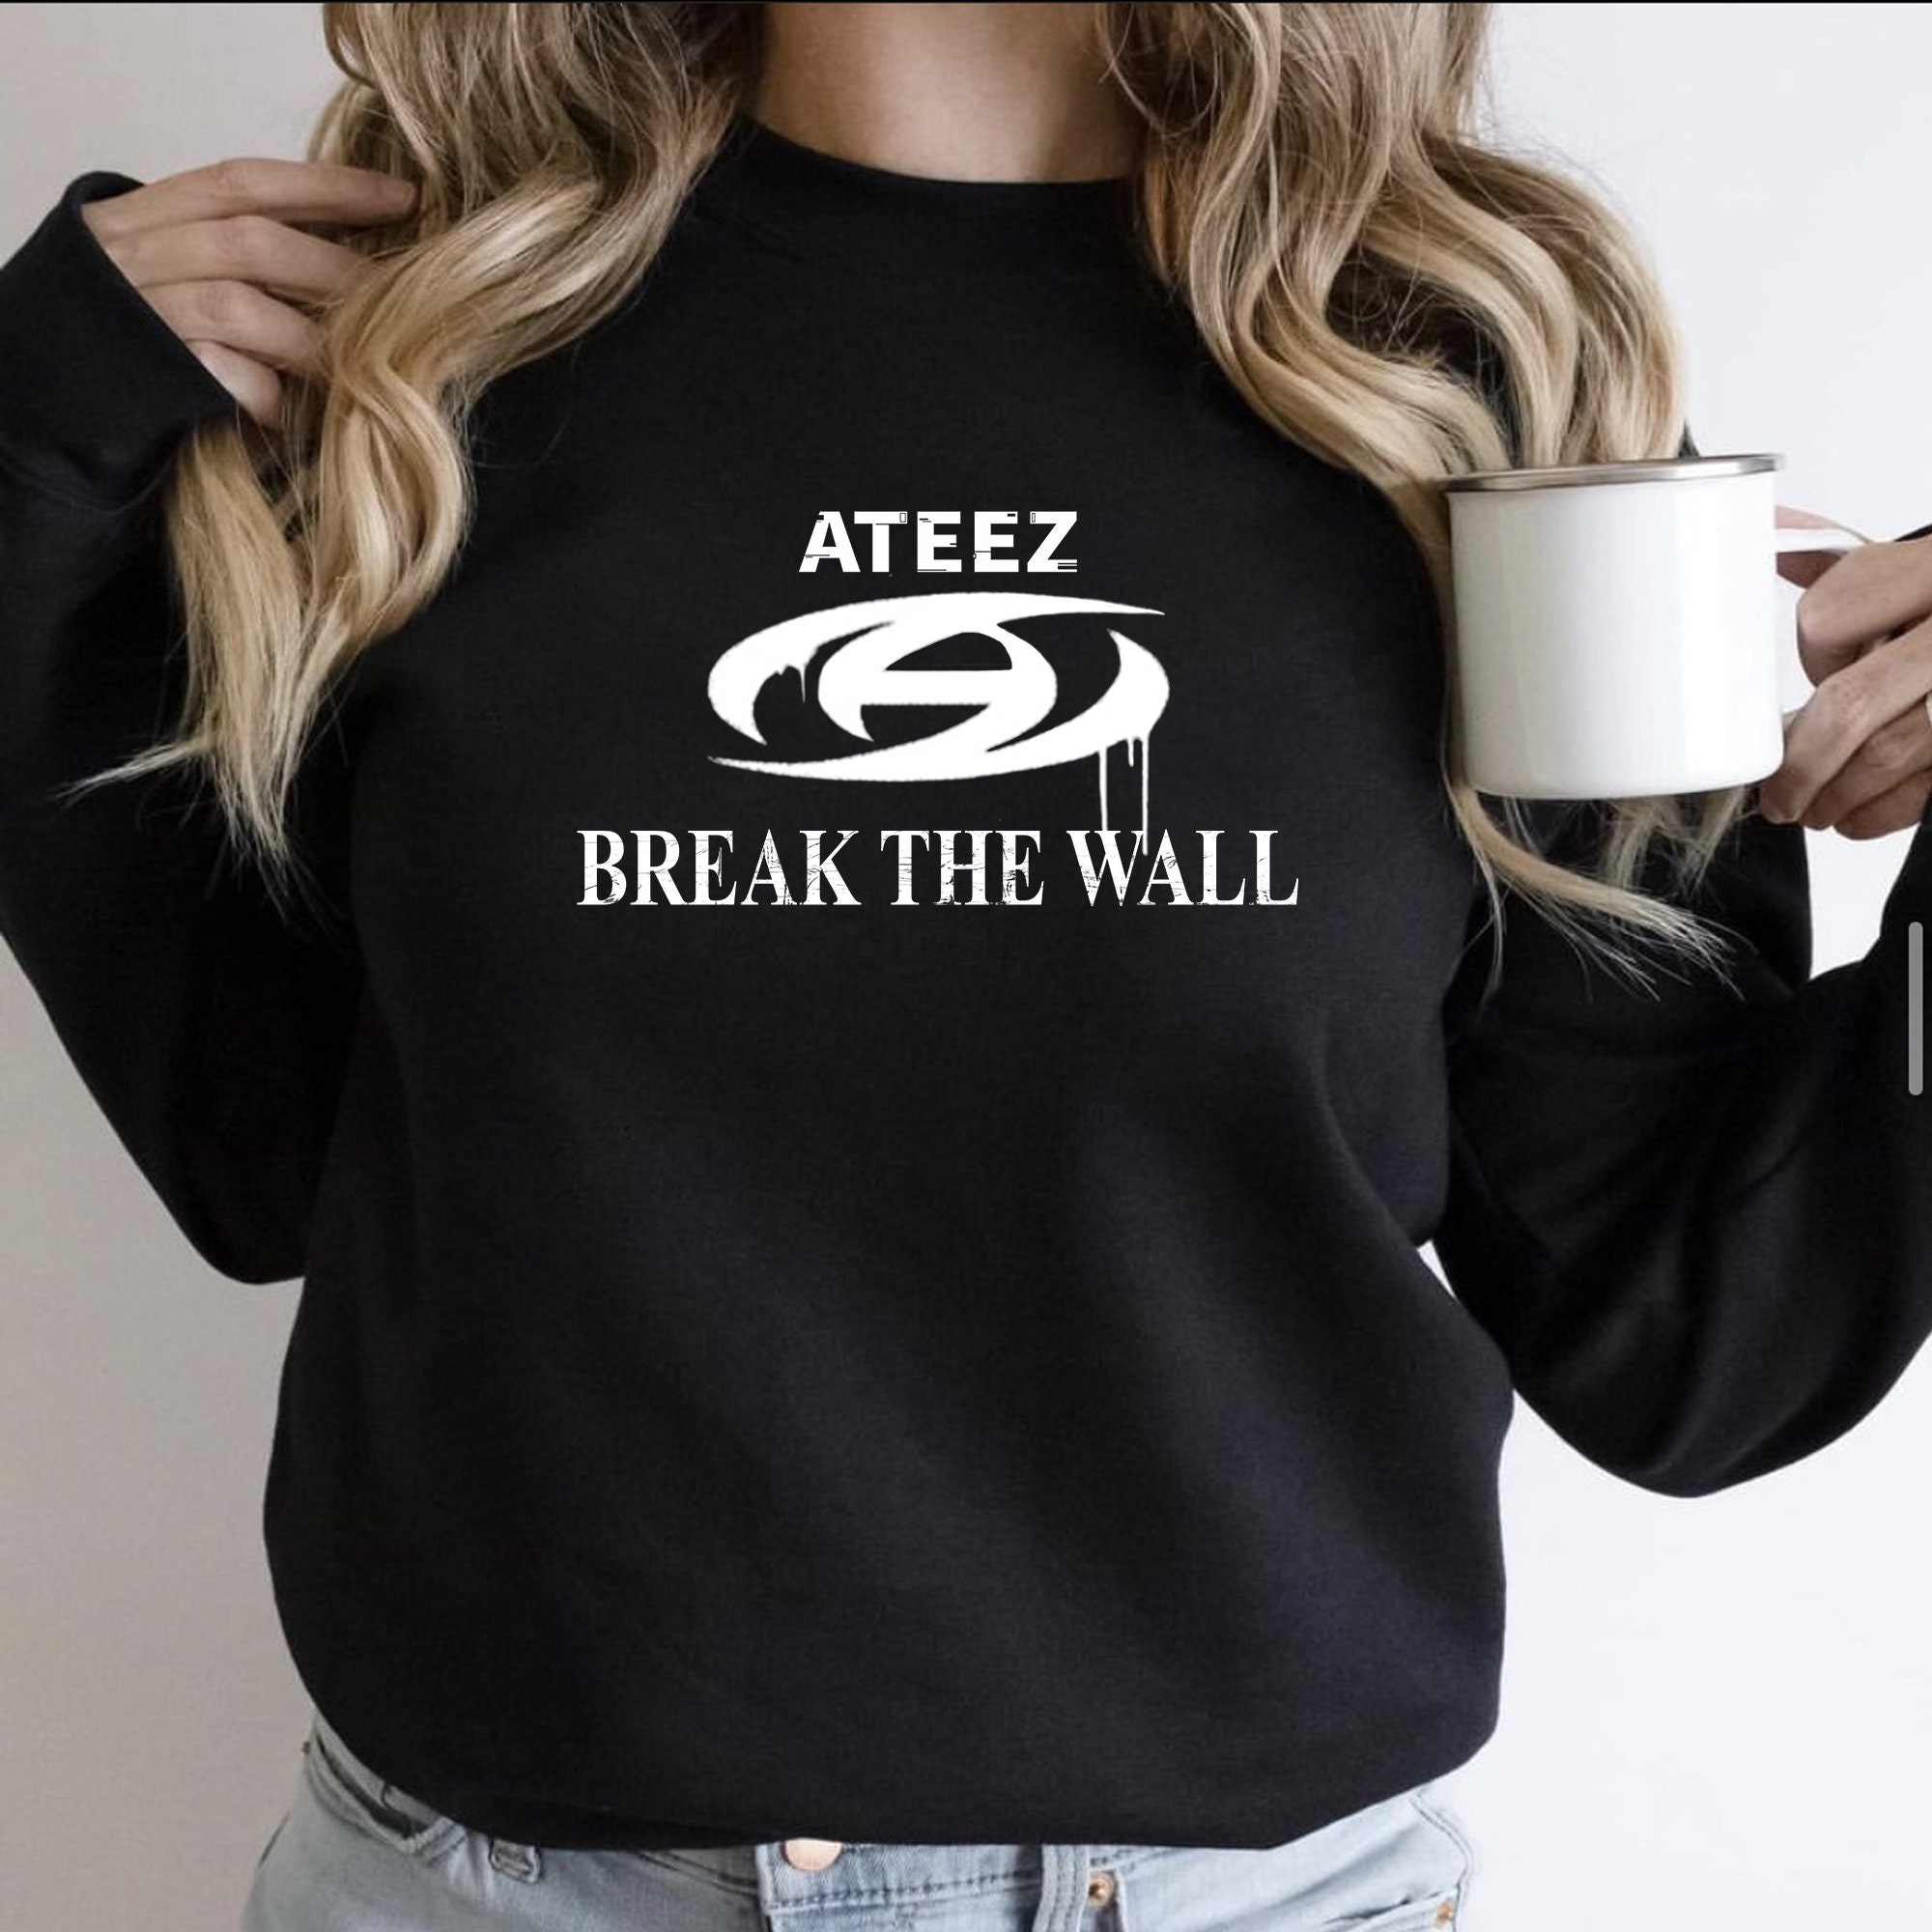 ATEEZ Break the wall world tour スウェット - K-POP/アジア